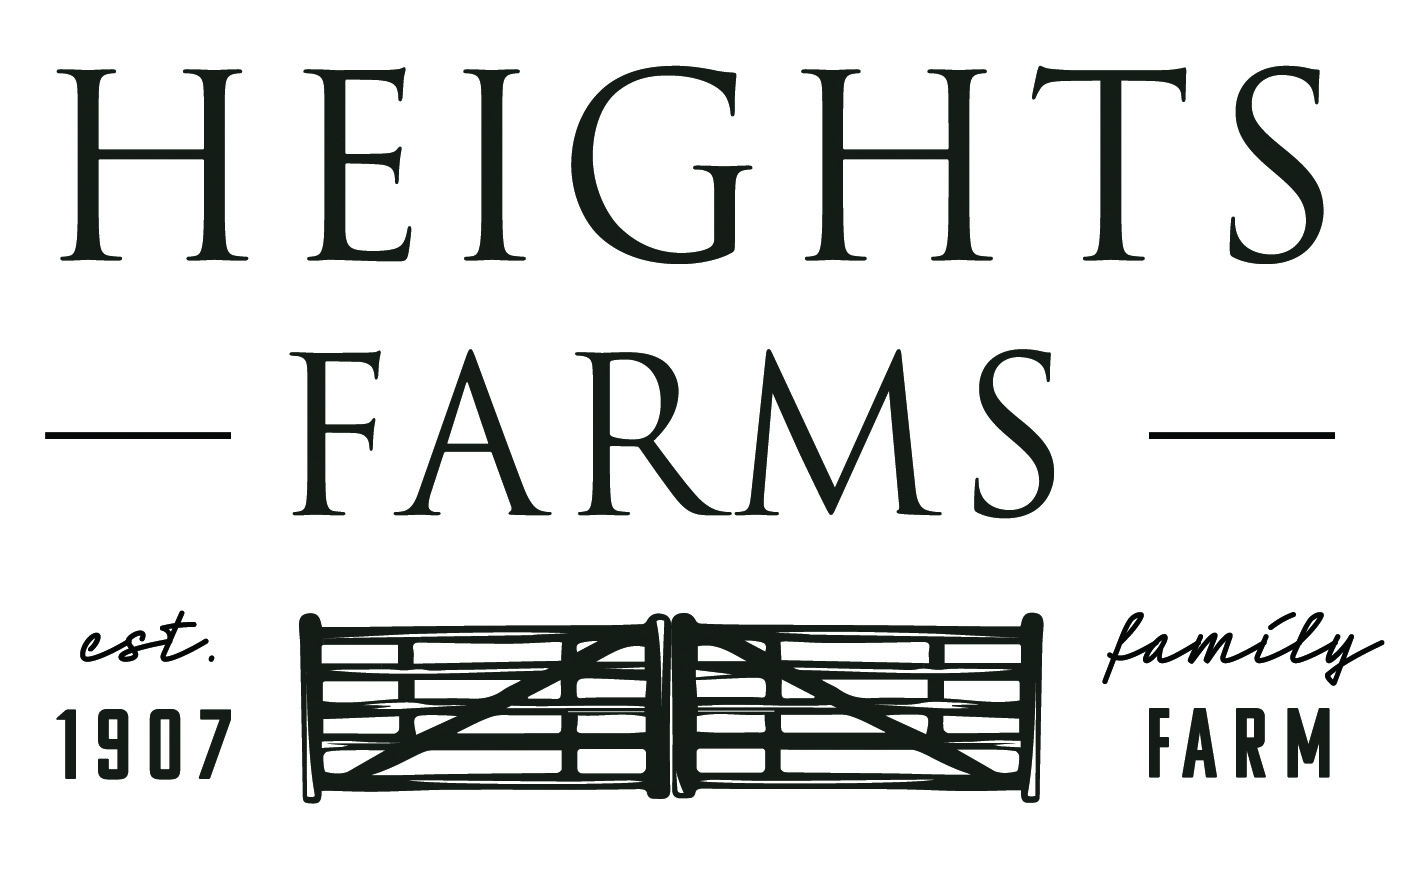 Heights Farm